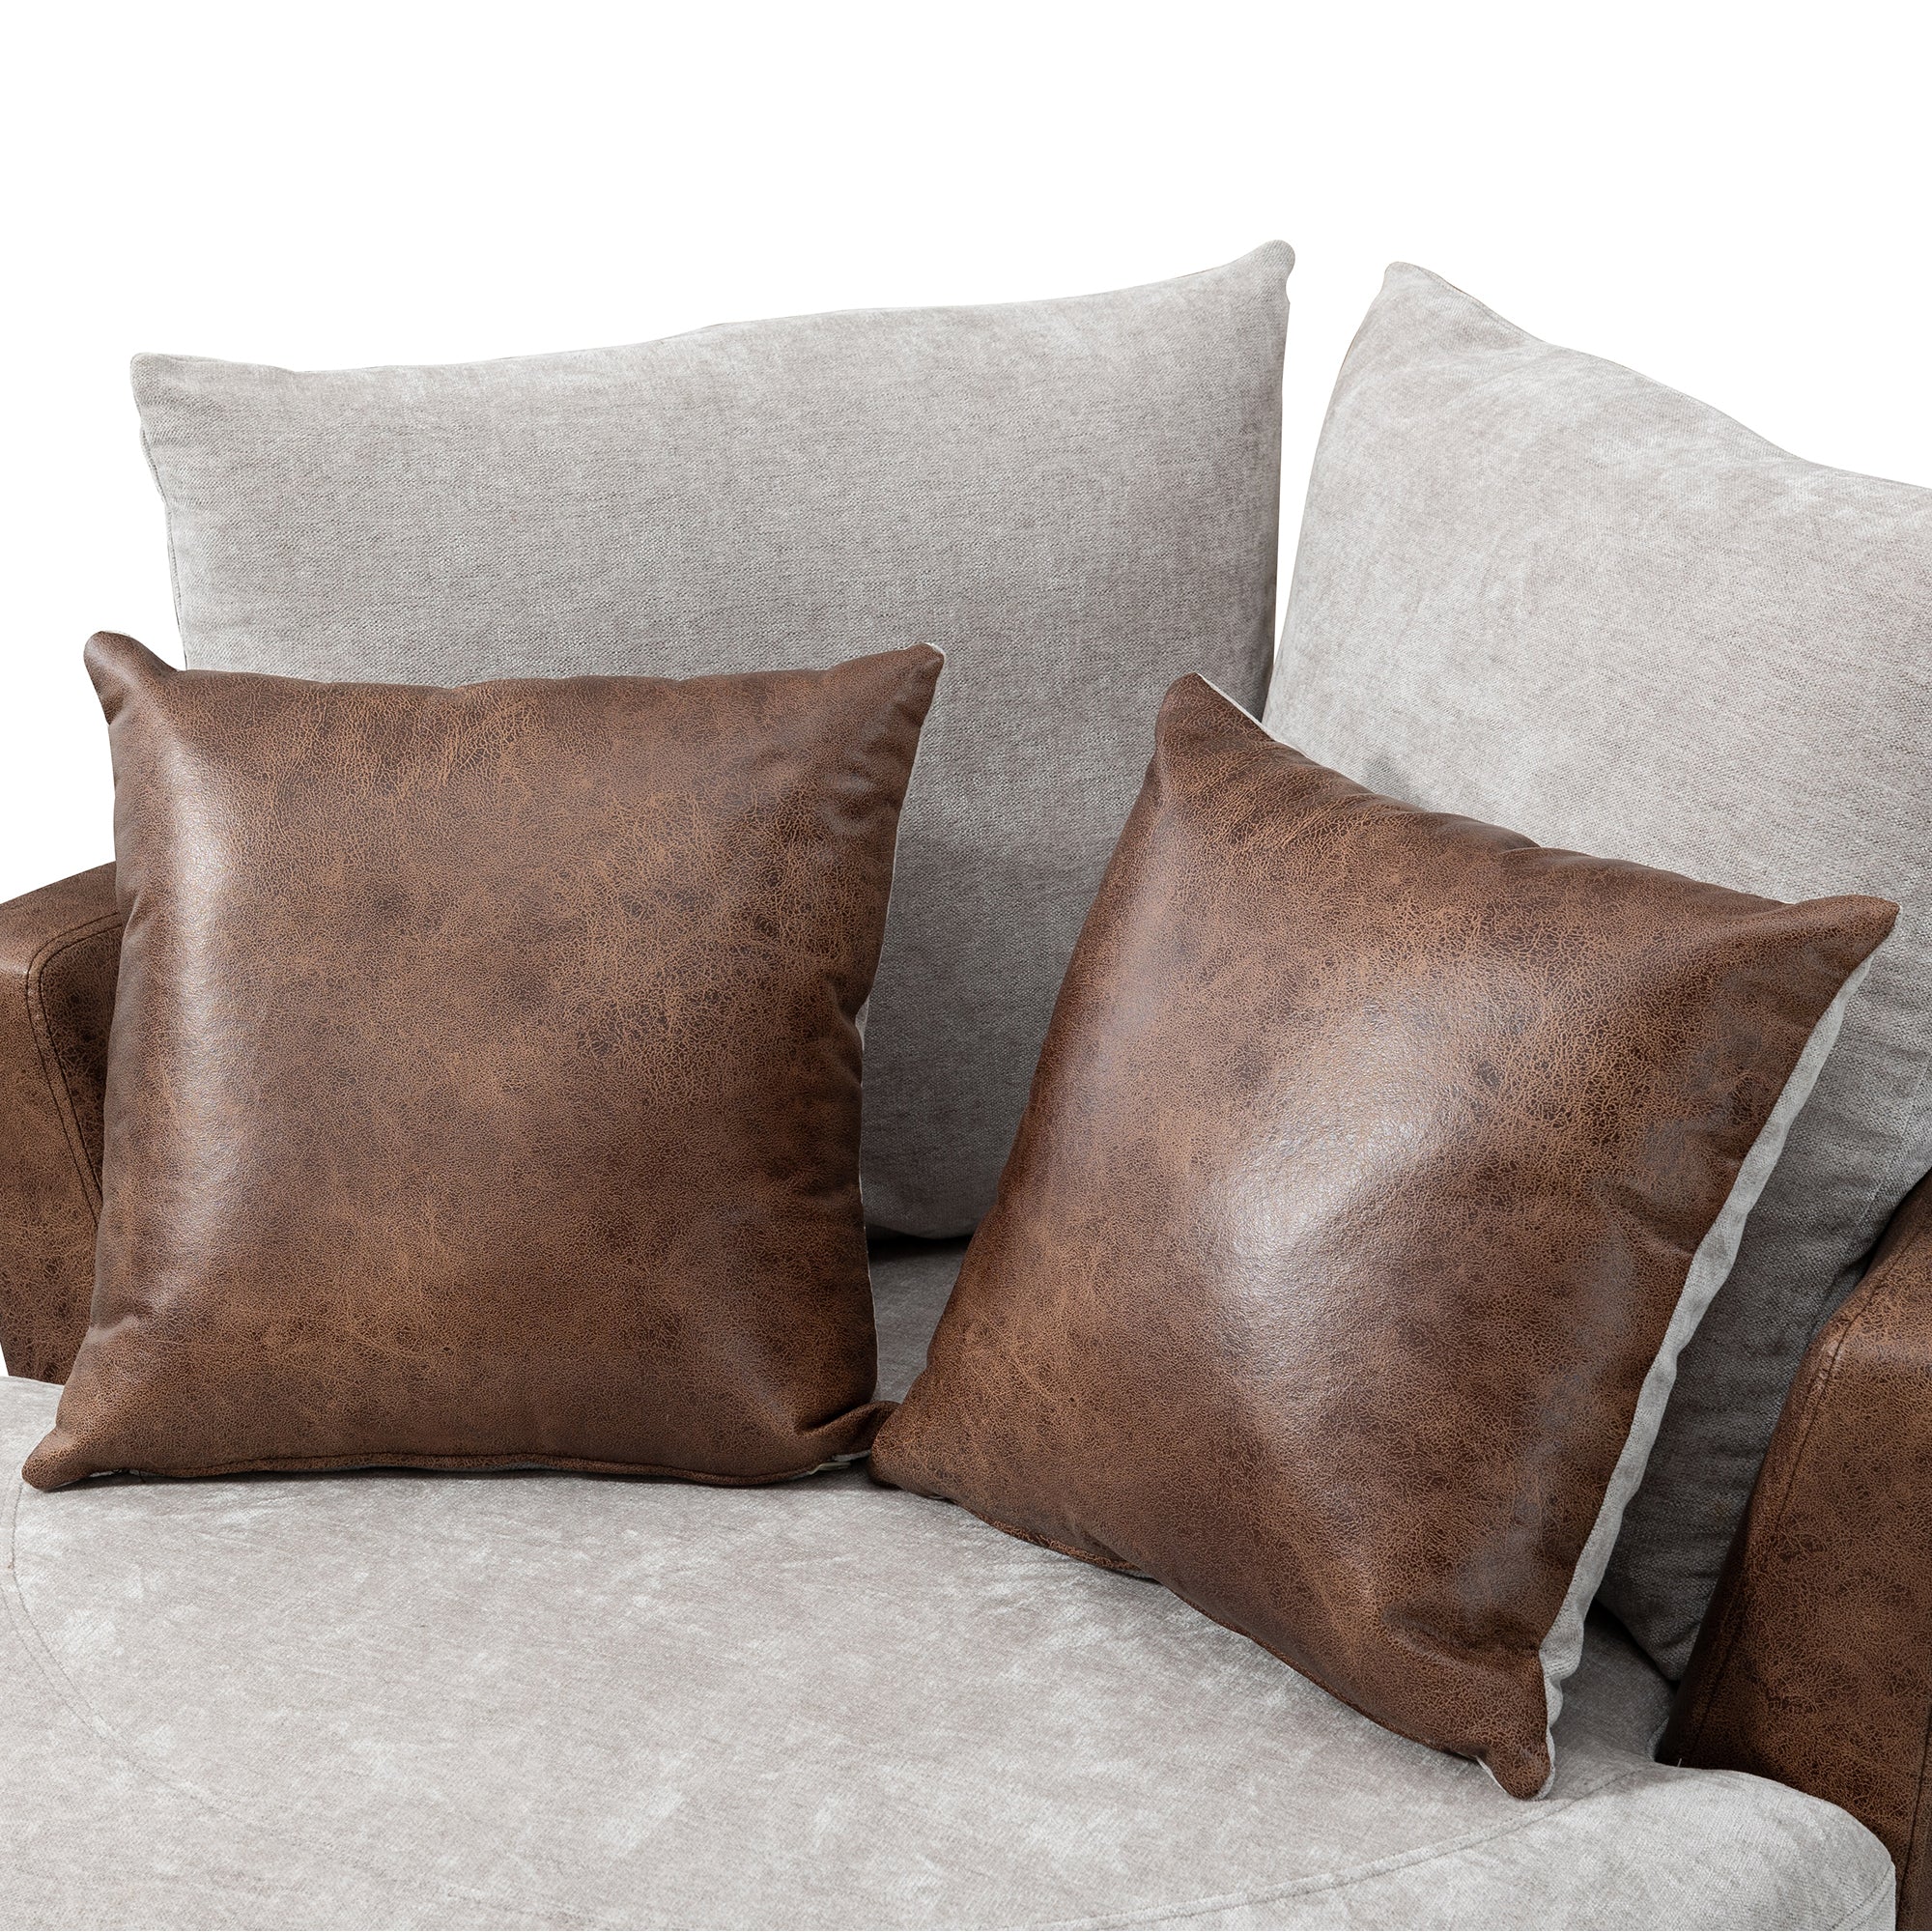 4 Pillows 360 Degree Swivel Round Sofa- Light Gray